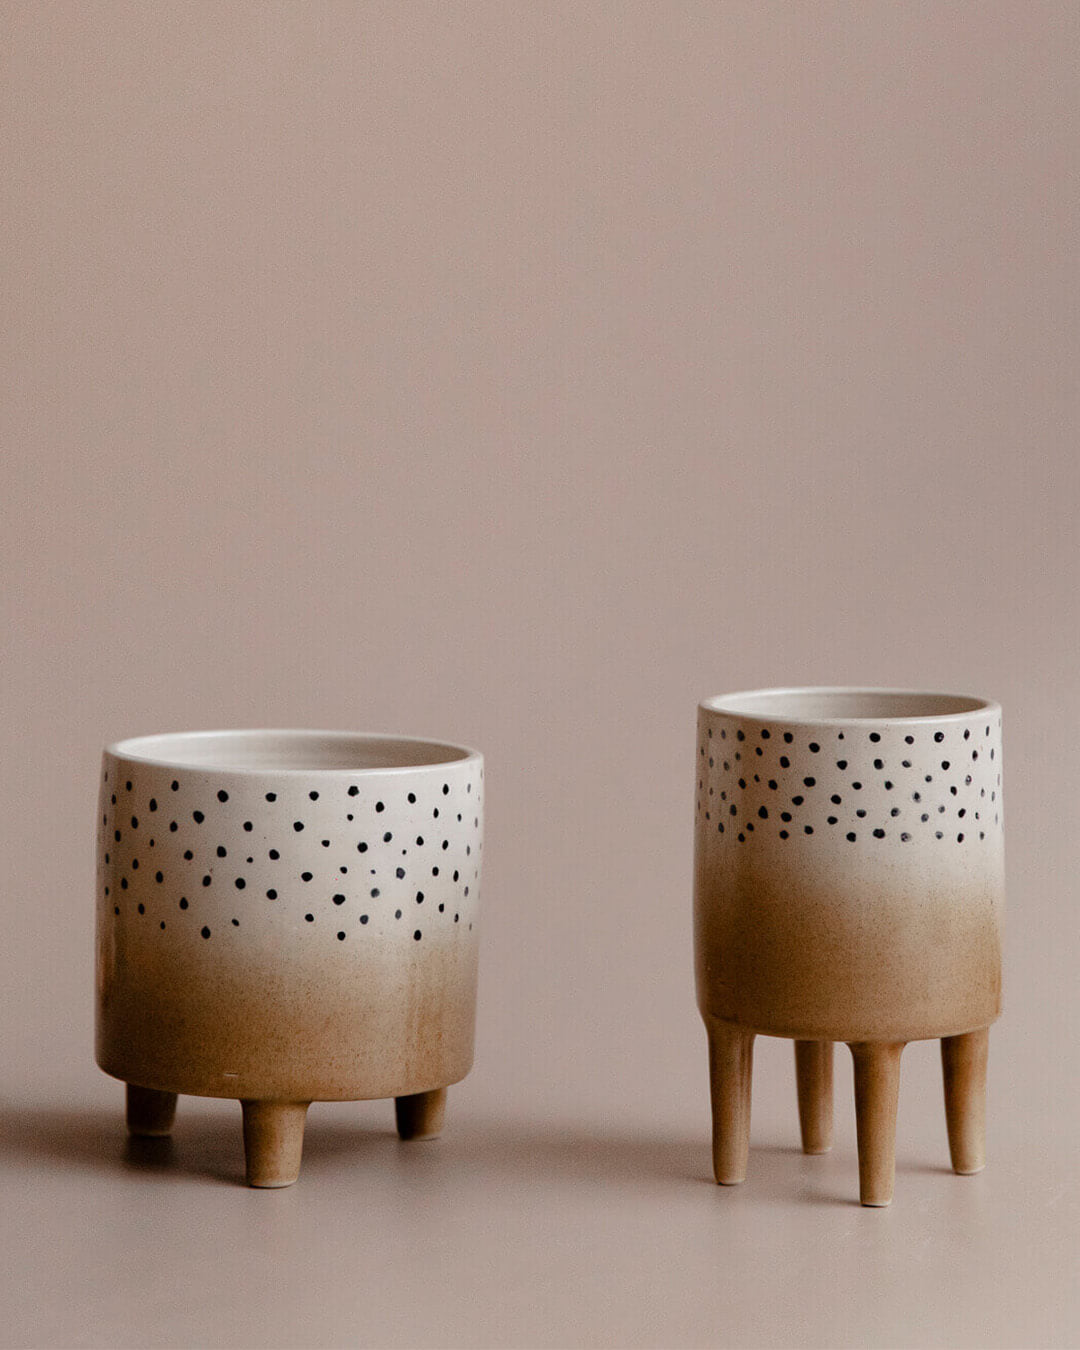 Kolus ceramic pots for indoor plants